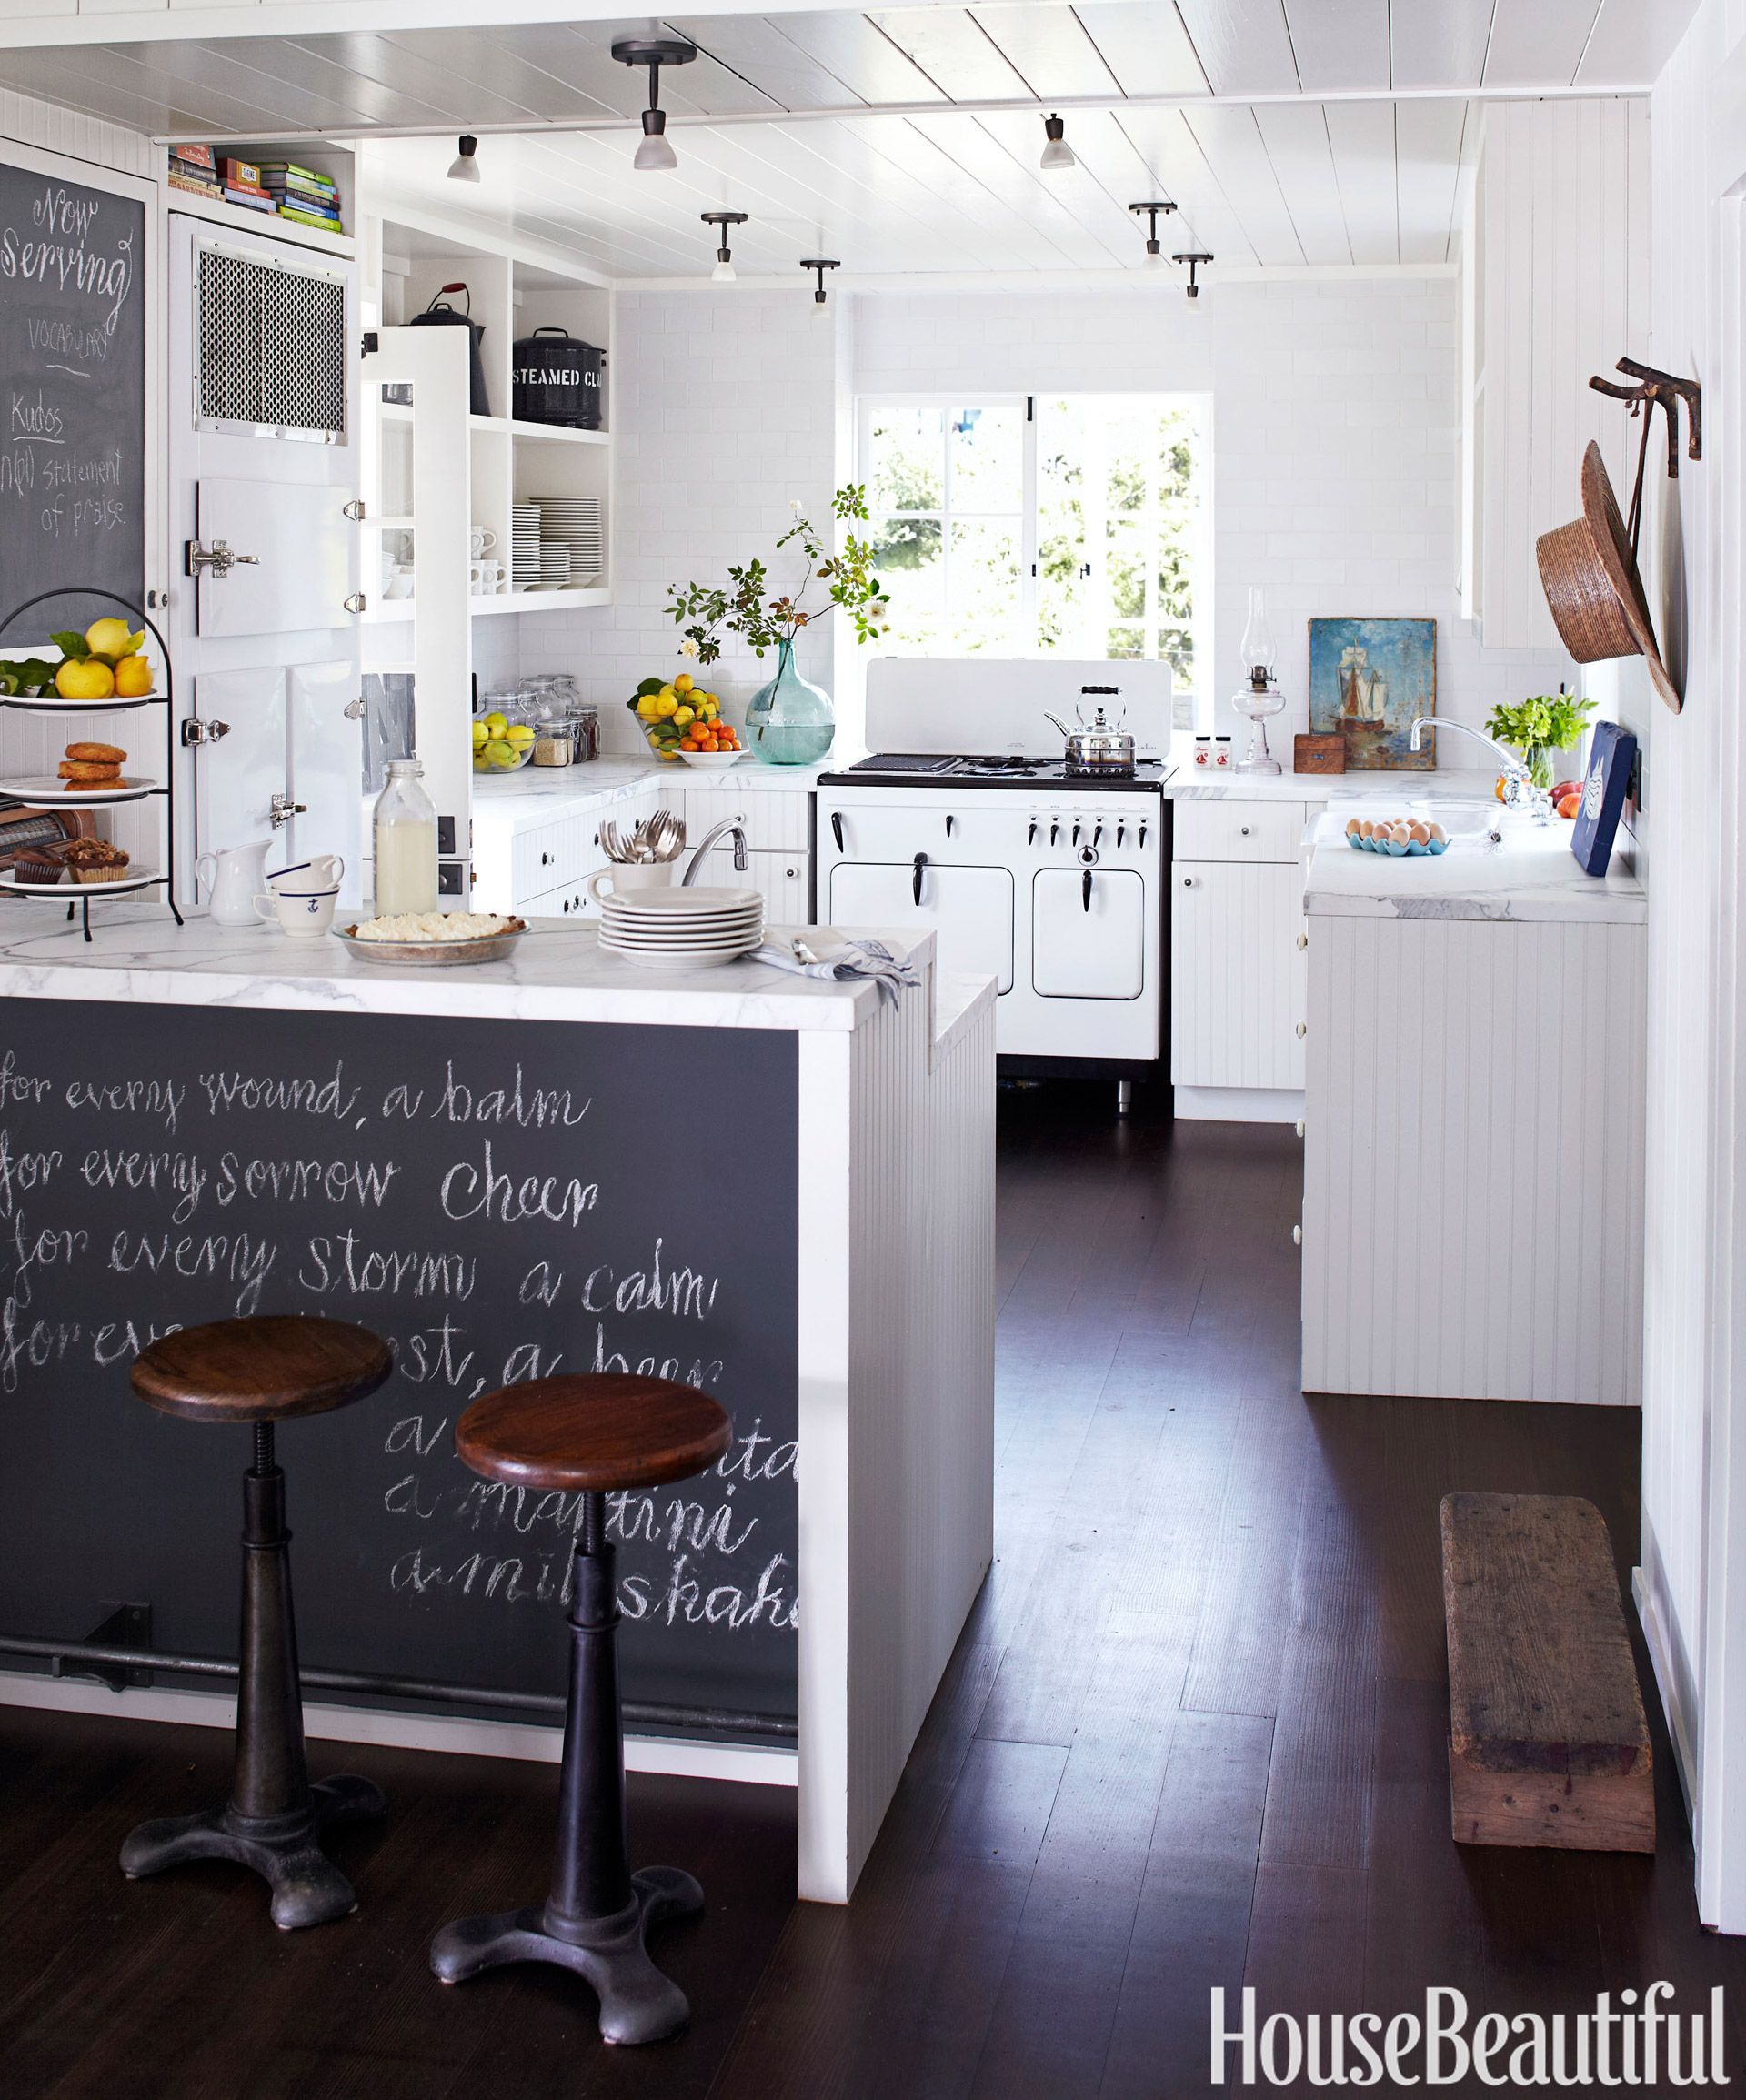 15 Kitchen Decorating Ideas Pictures Of Kitchen Decor